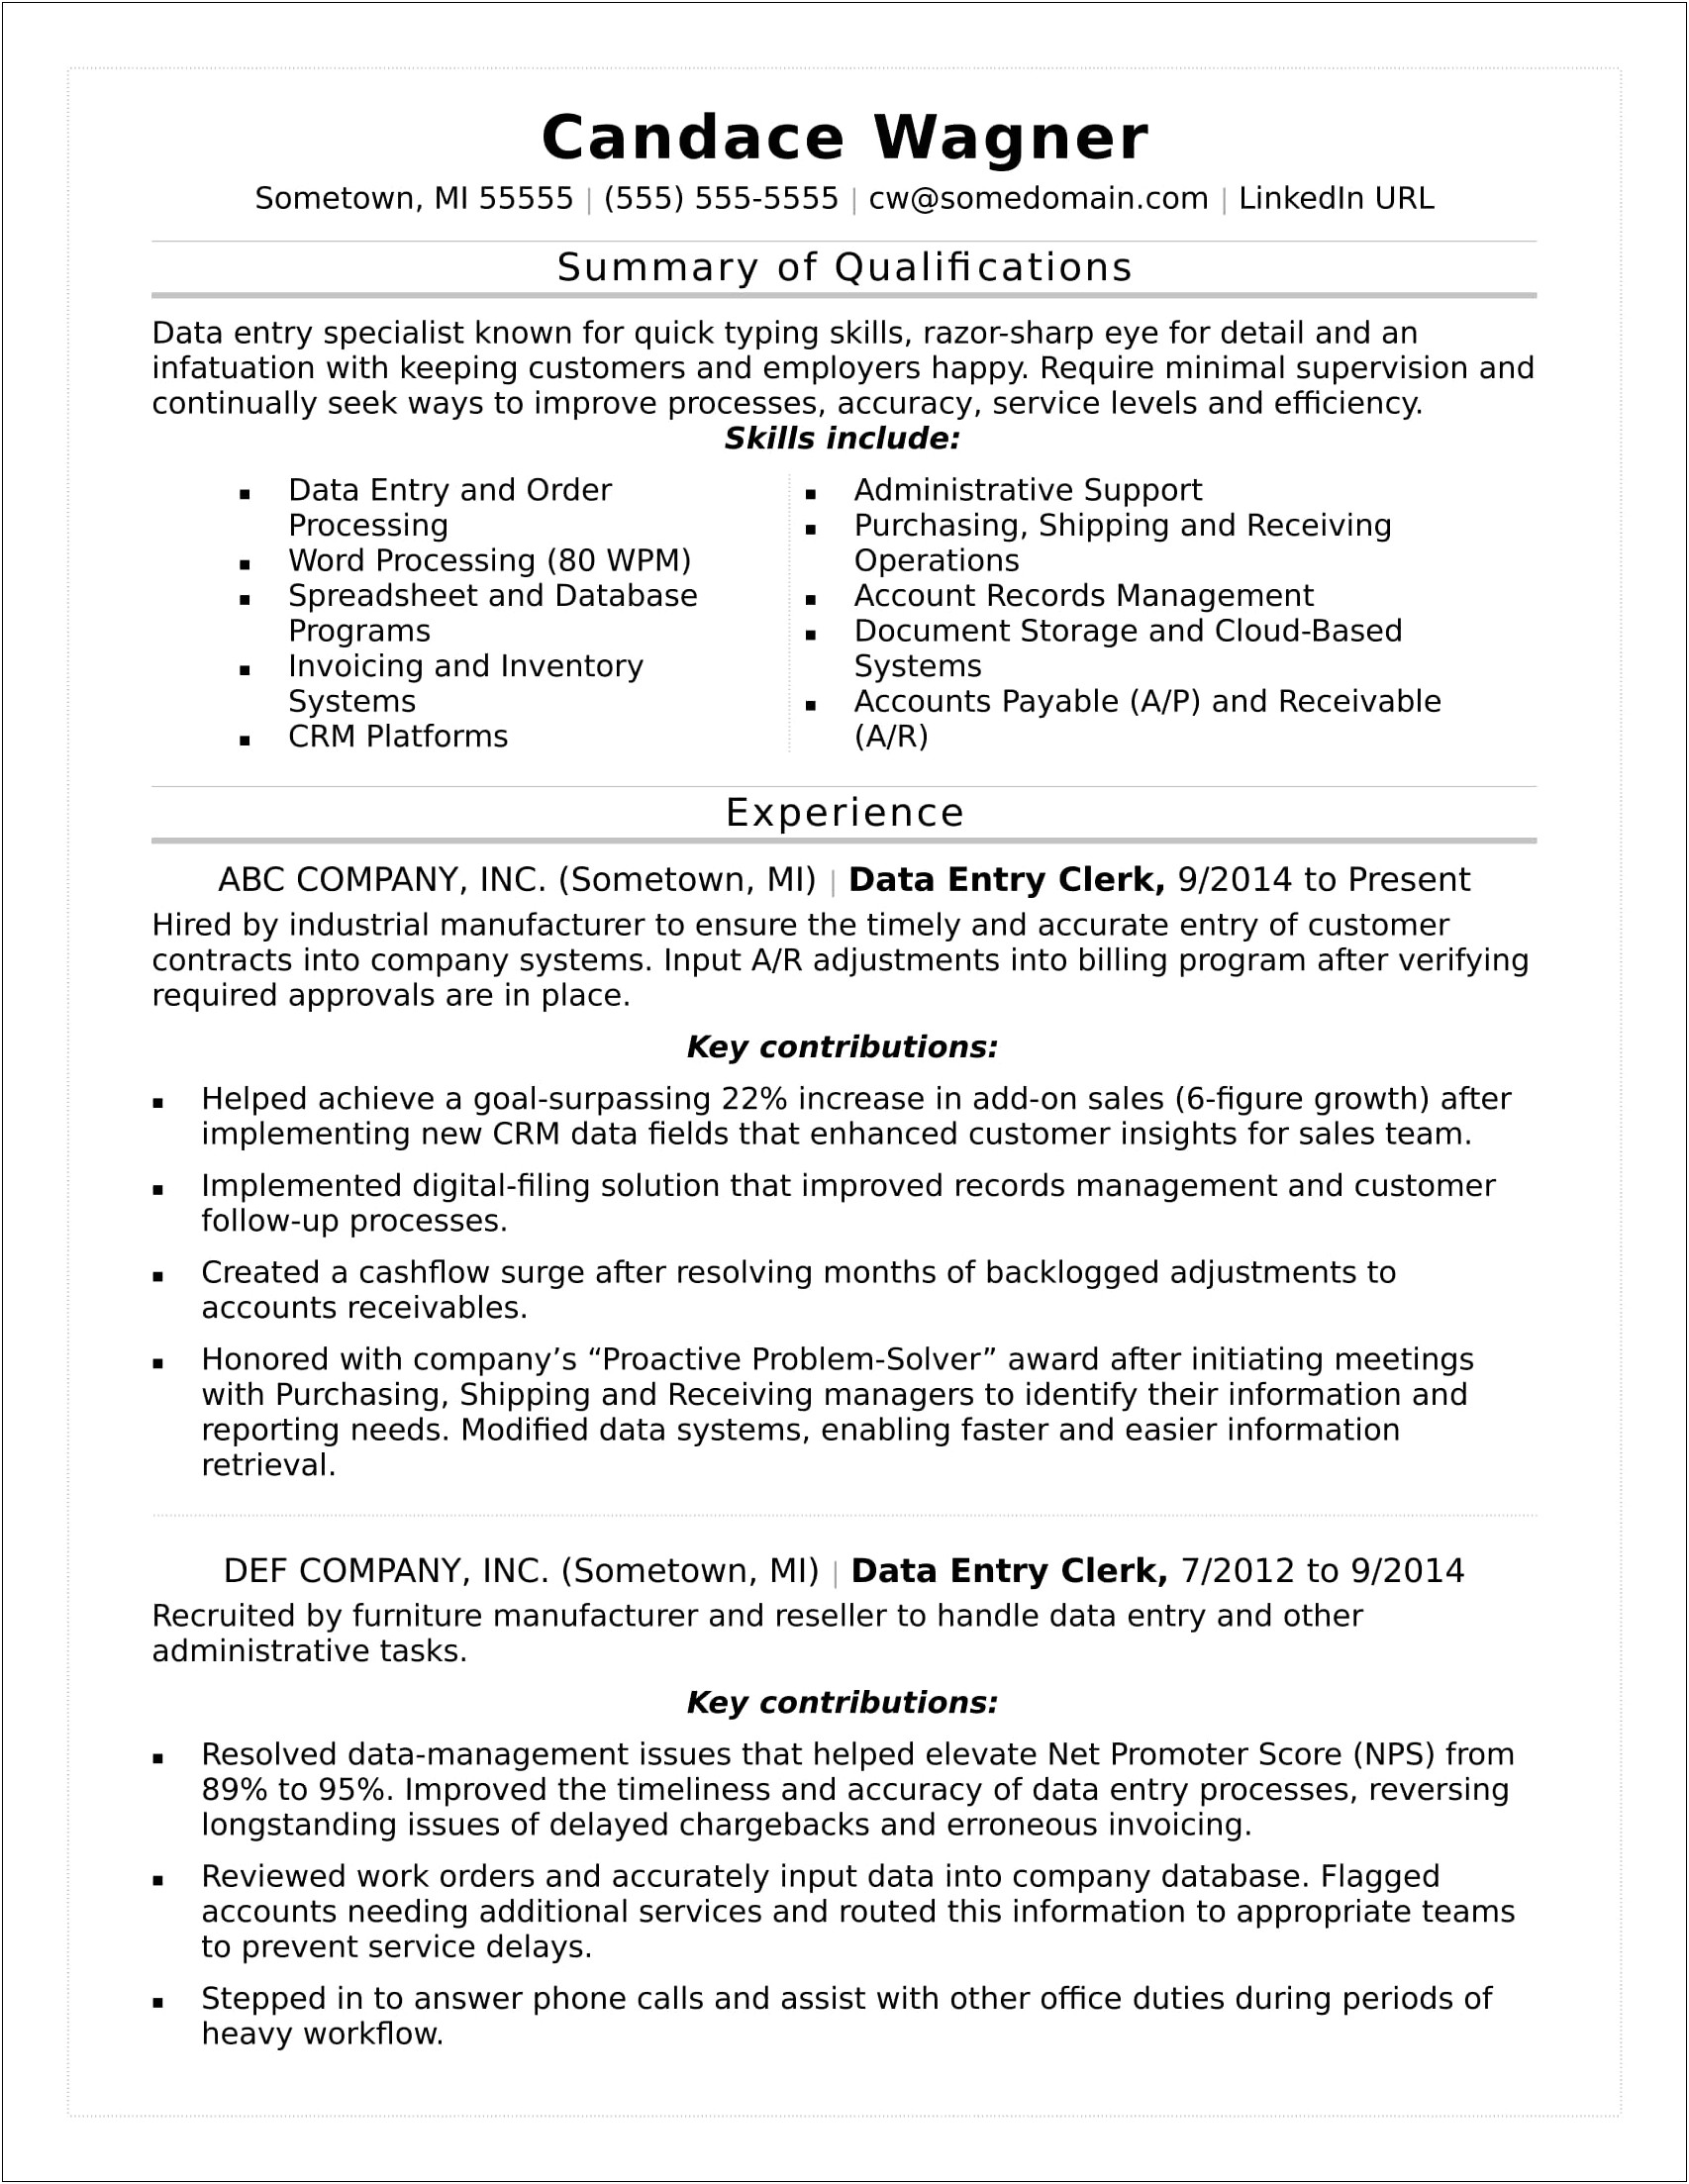 Free Resume Template Seek Career Advice